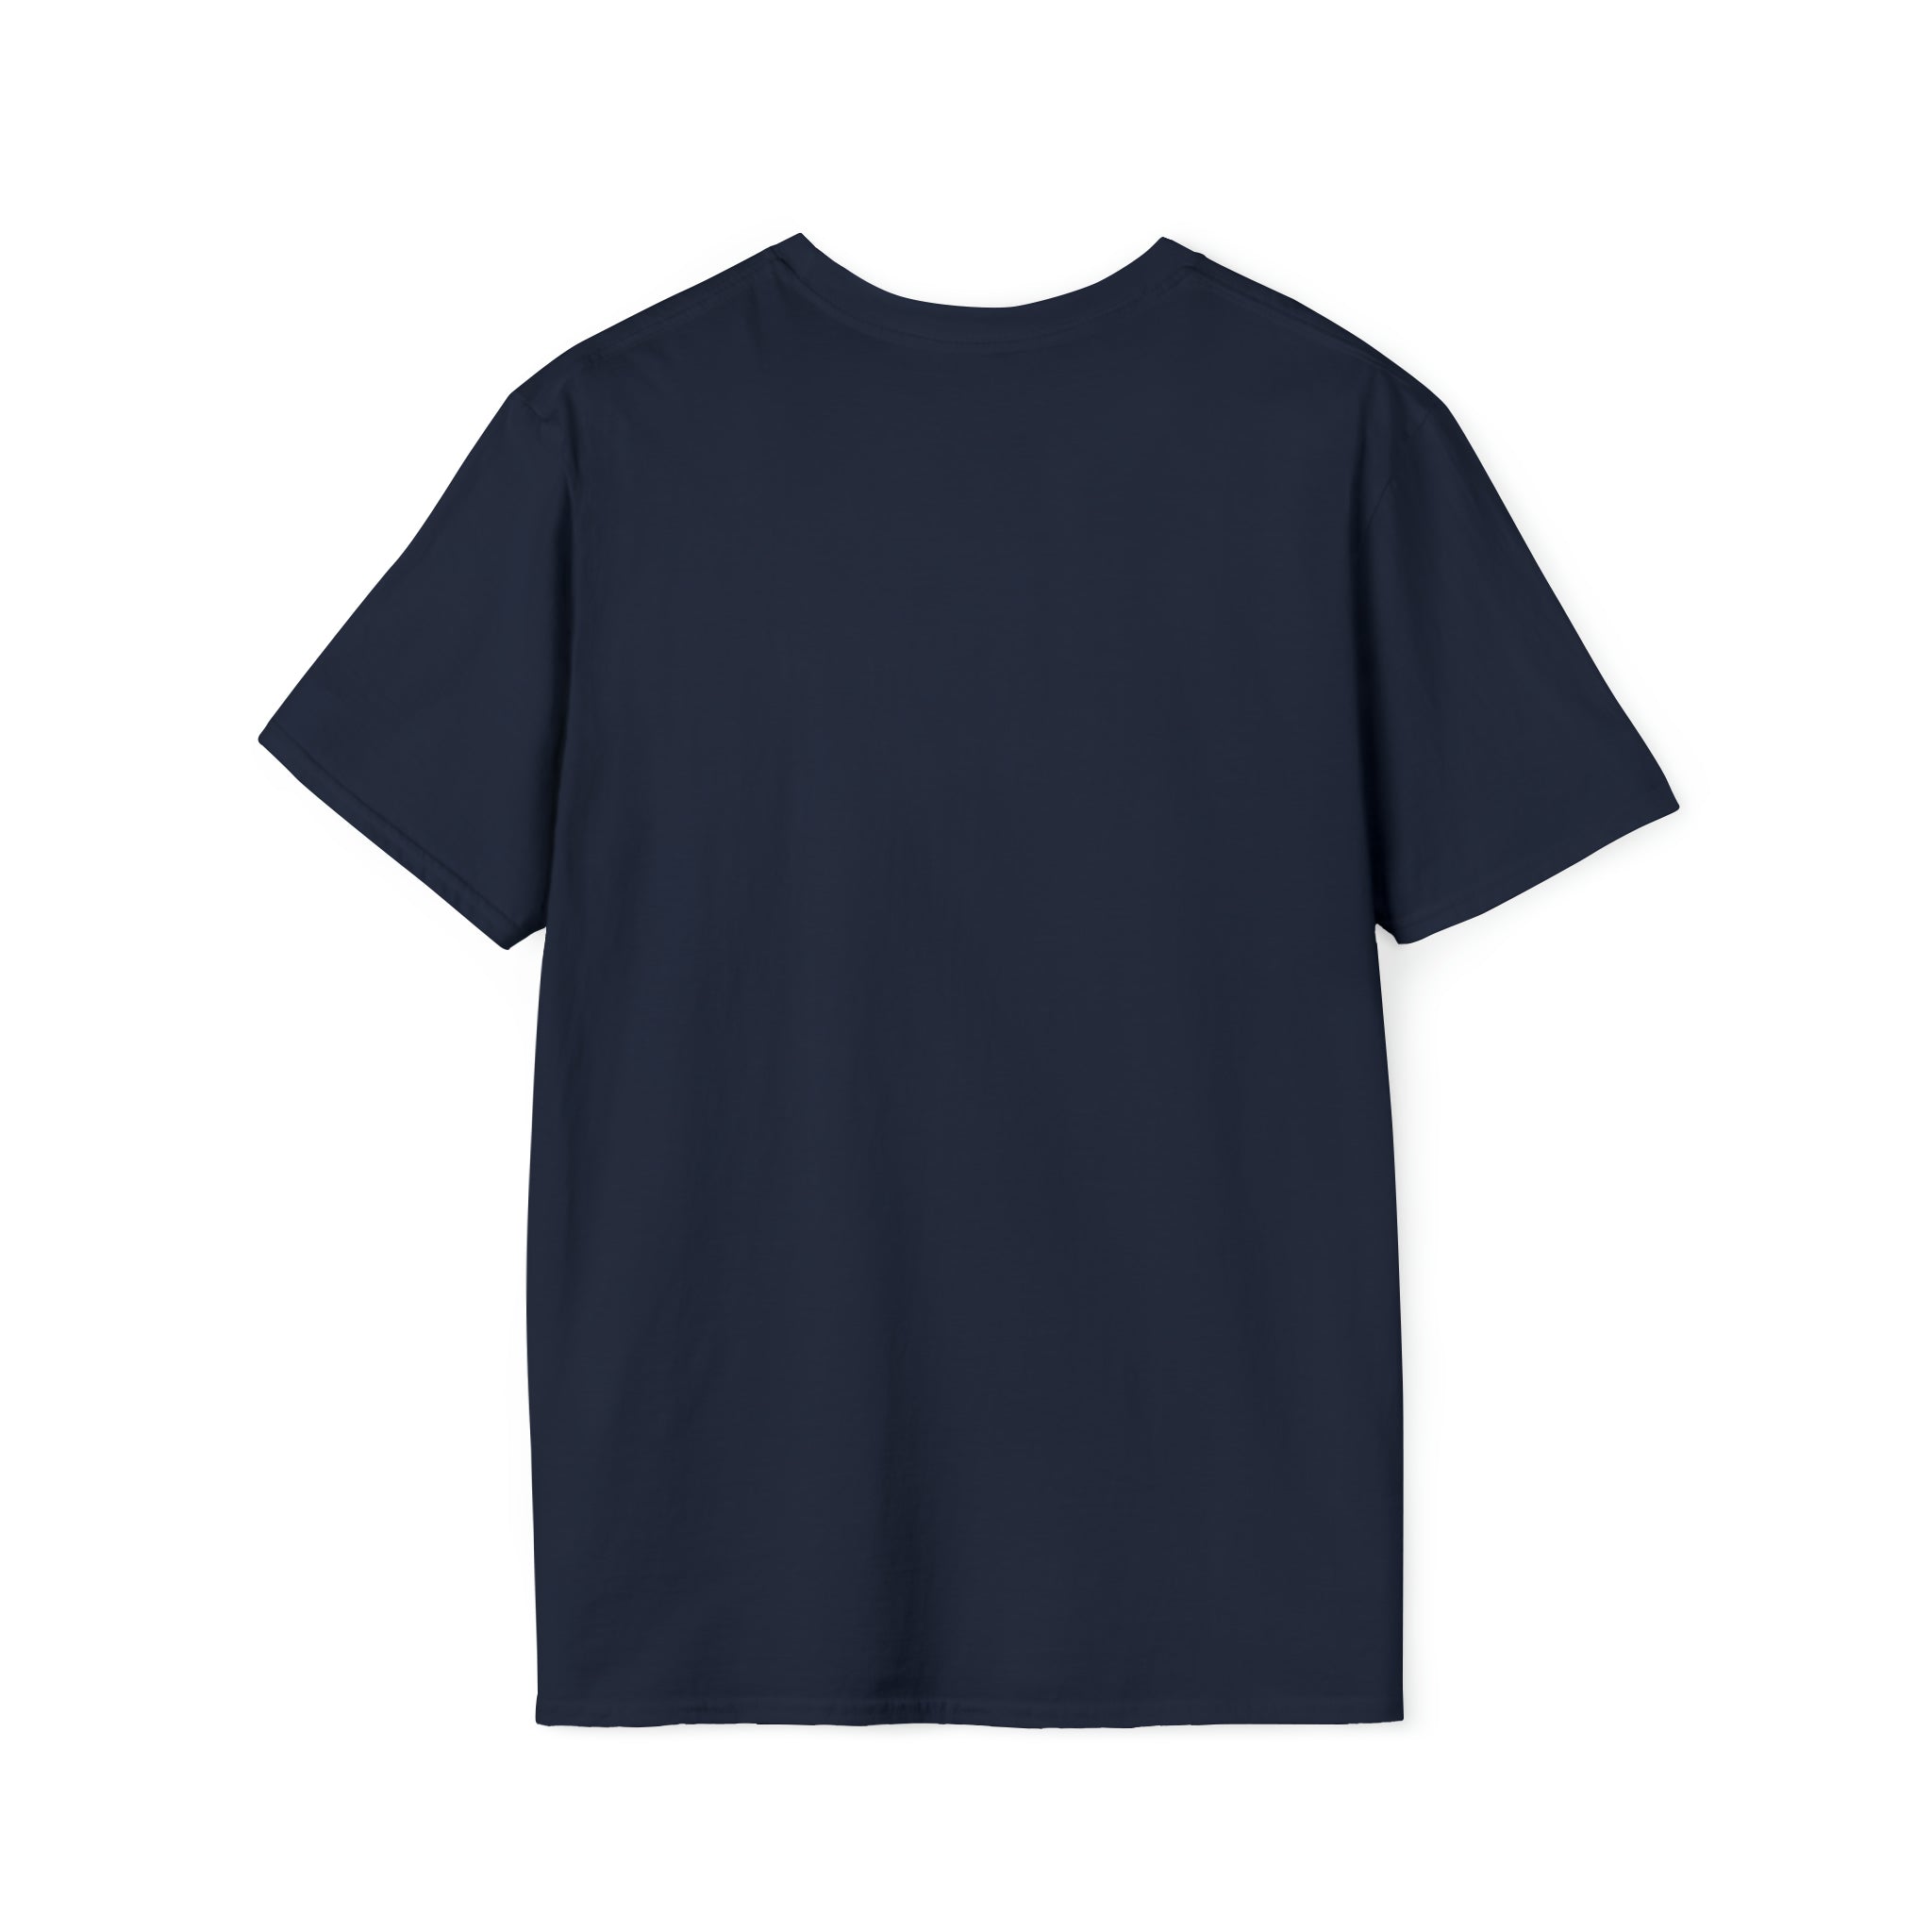 Mandatory Family Fun Required - Men's Unisex Softstyle T-Shirt